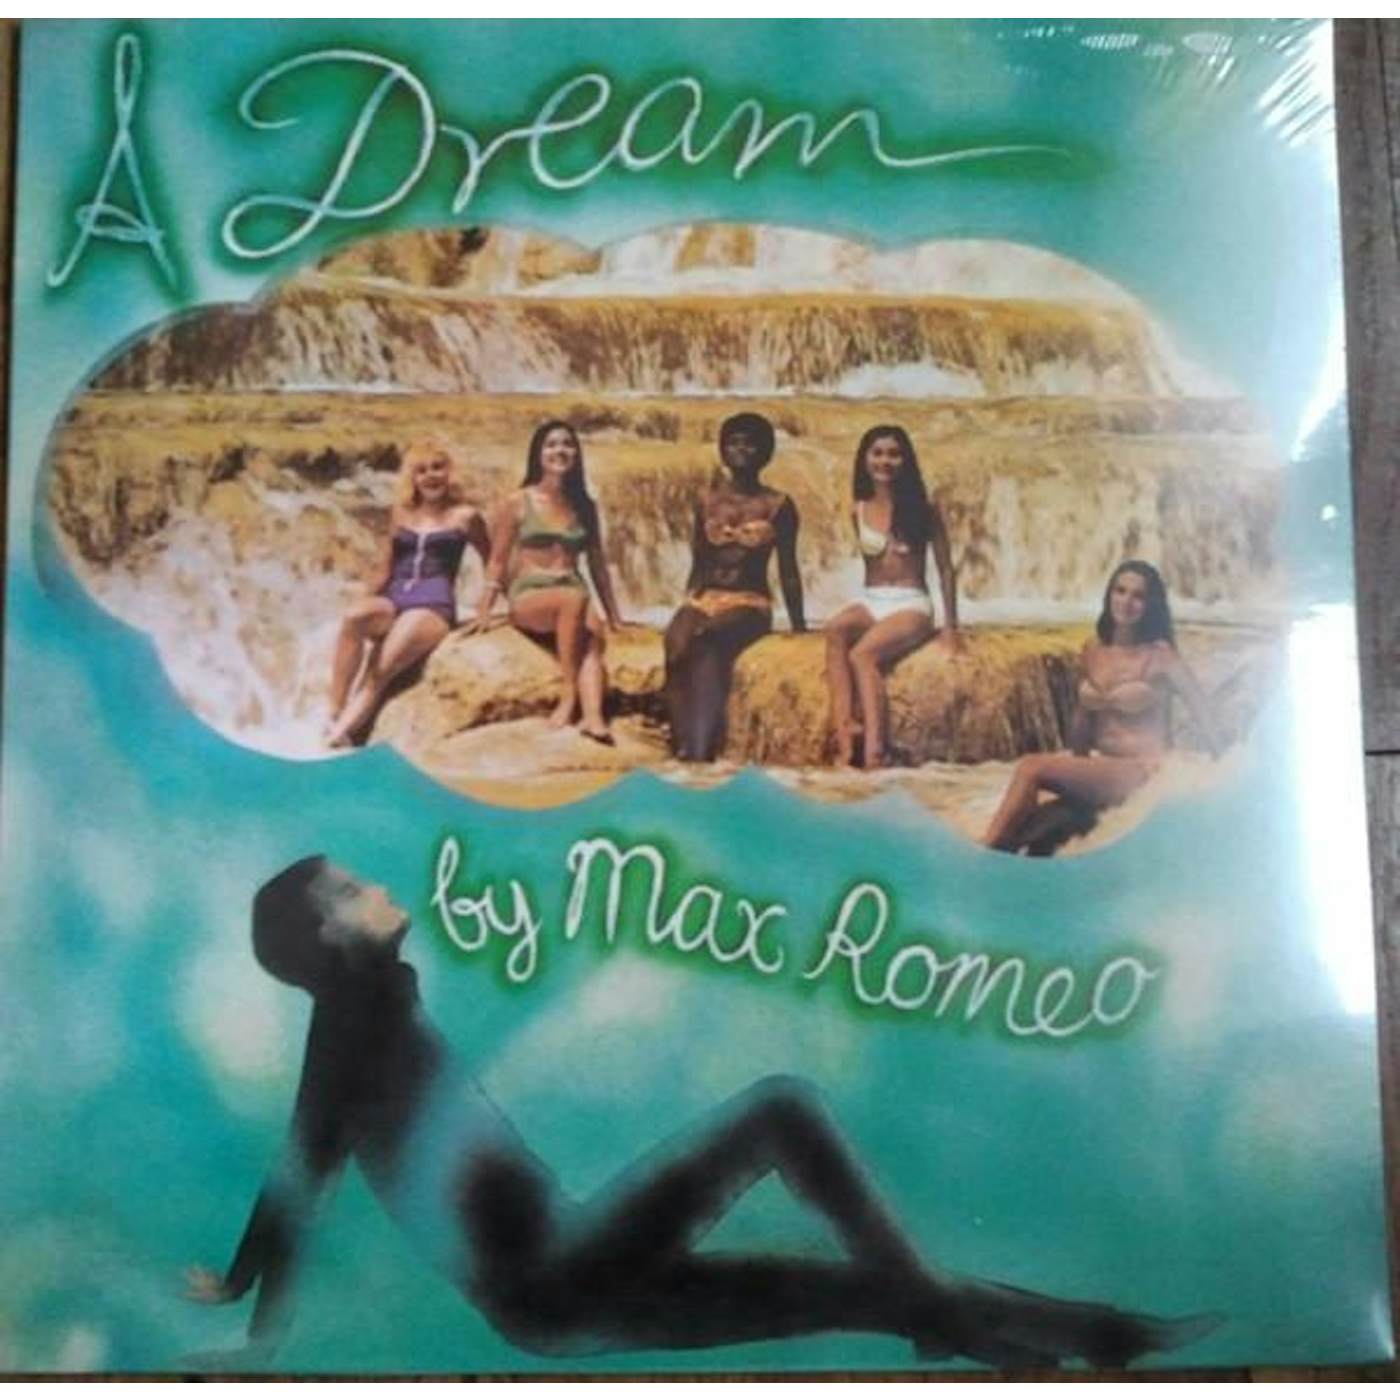 Max Romeo DREAM Vinyl Record